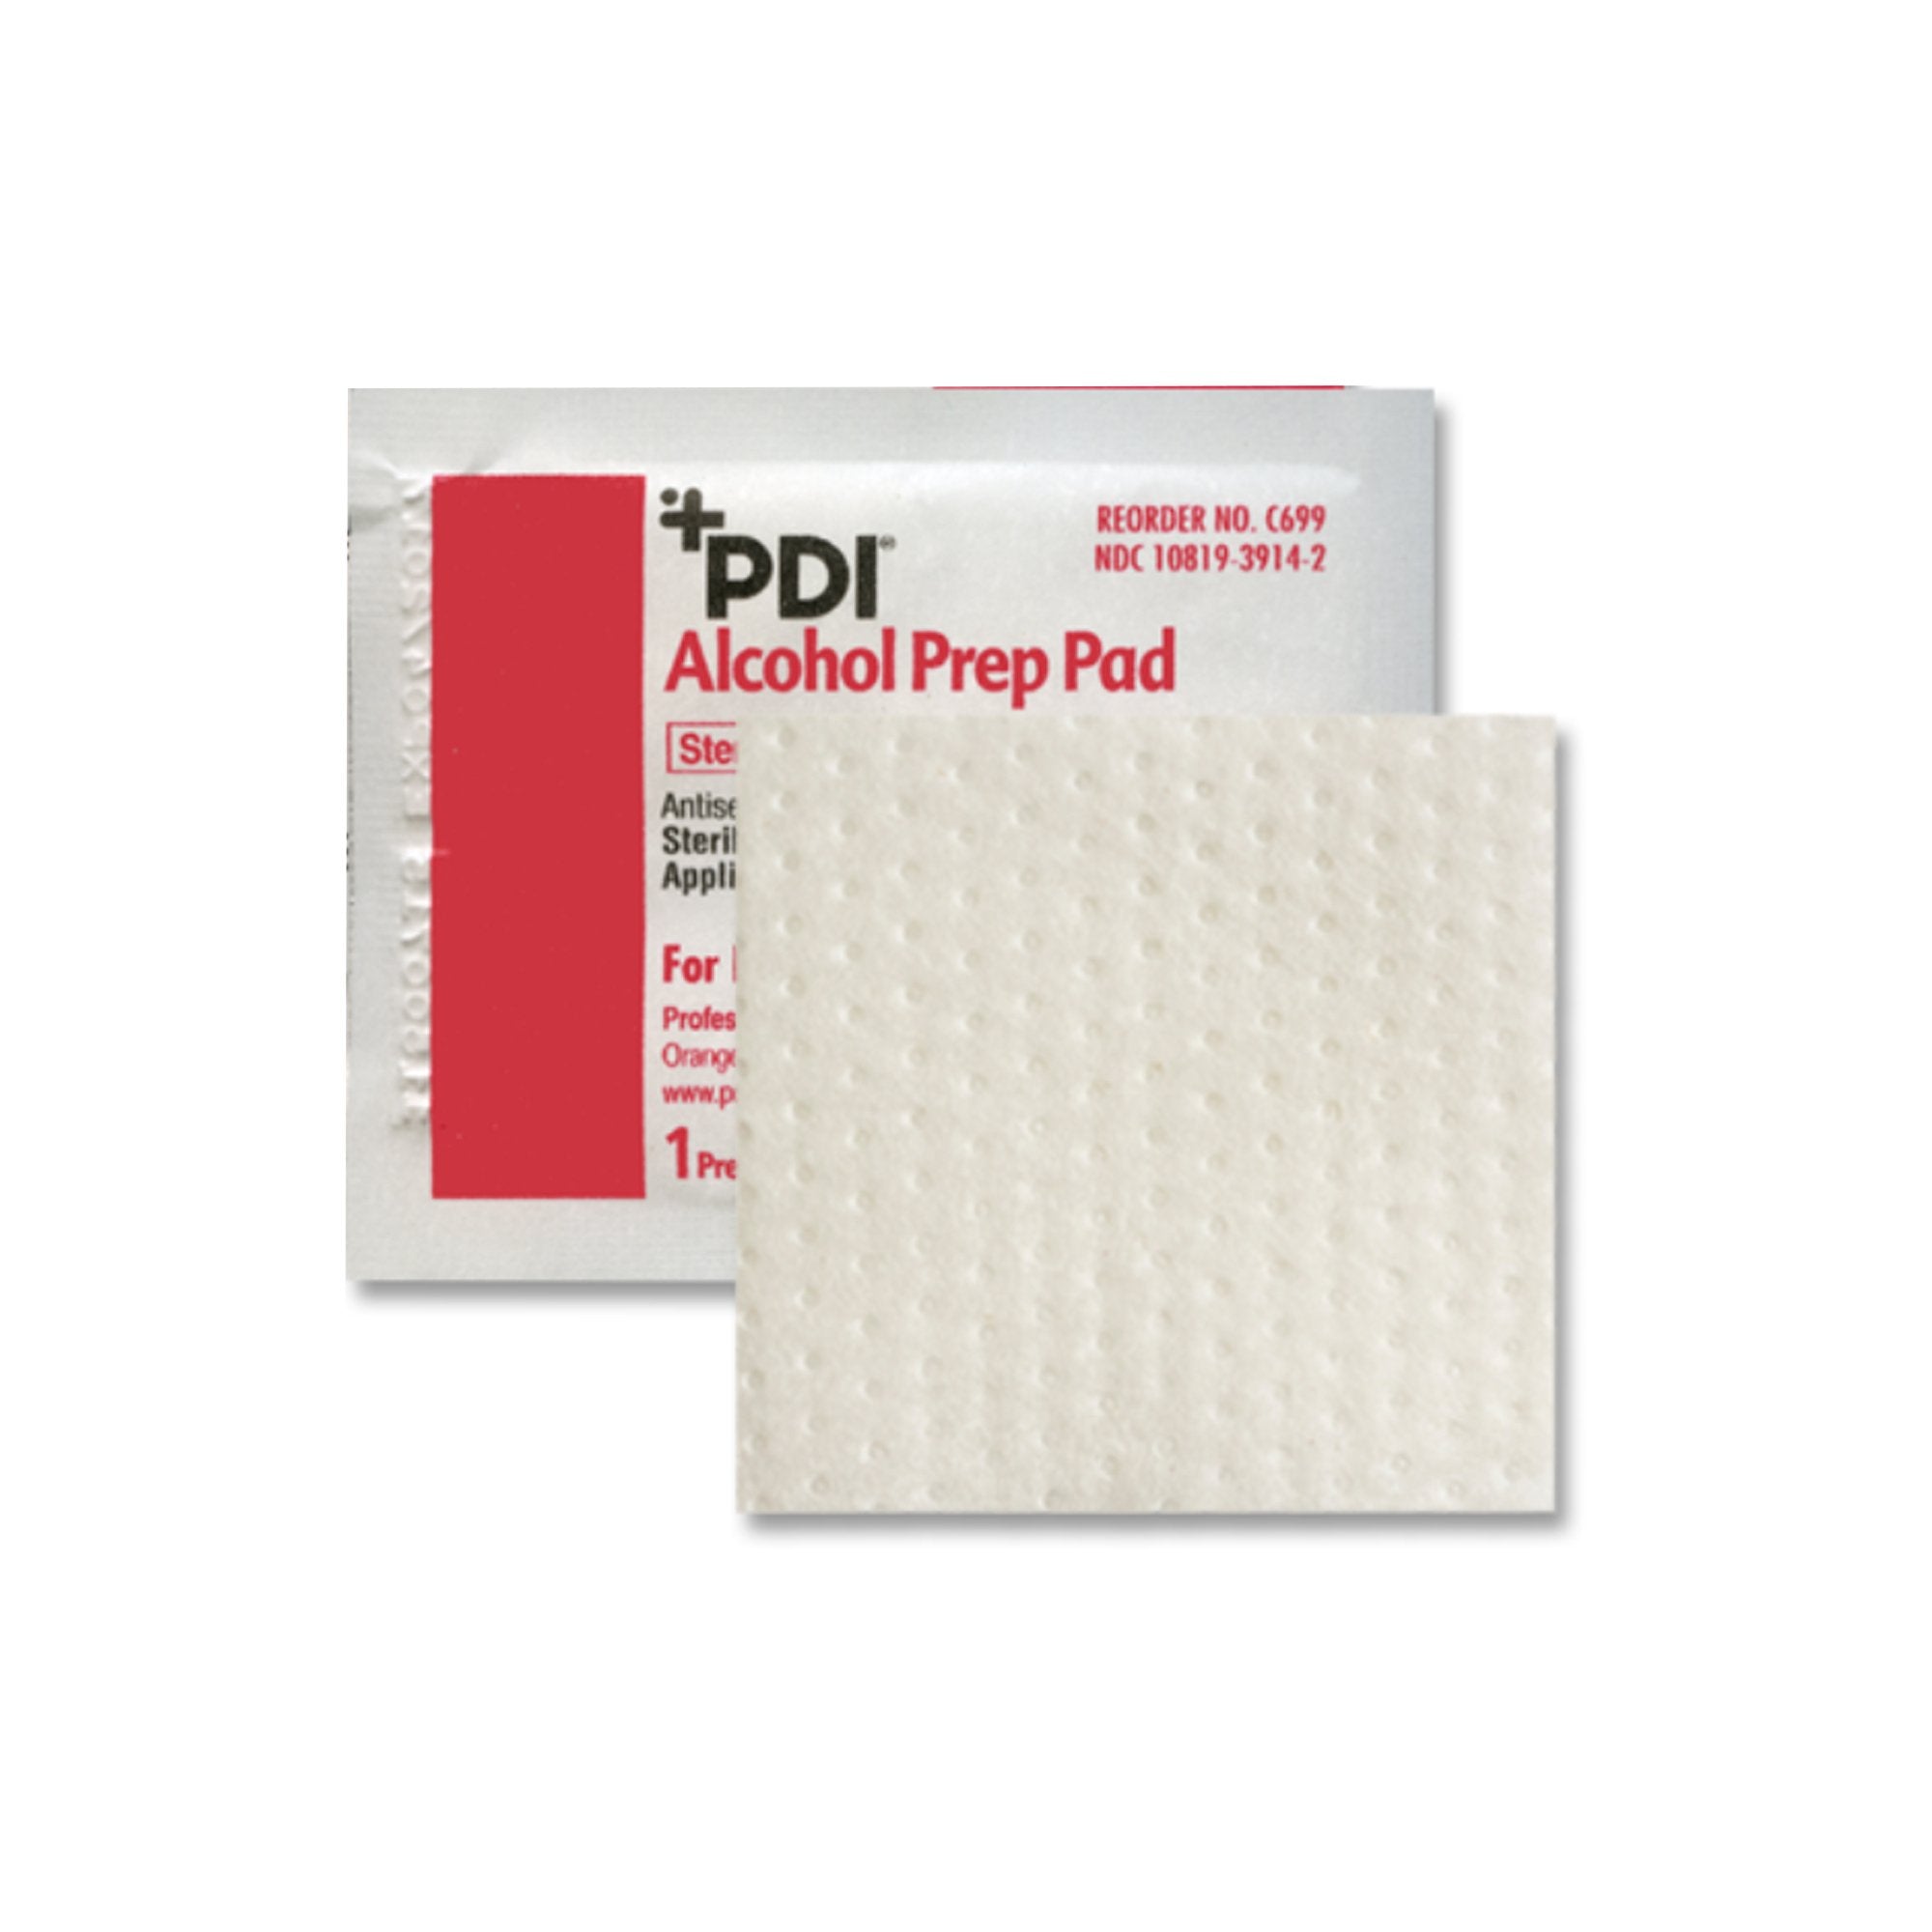 Alcohol Prep Pad PDI 70% Strength Isopropyl Alcohol Individual Packet Sterile